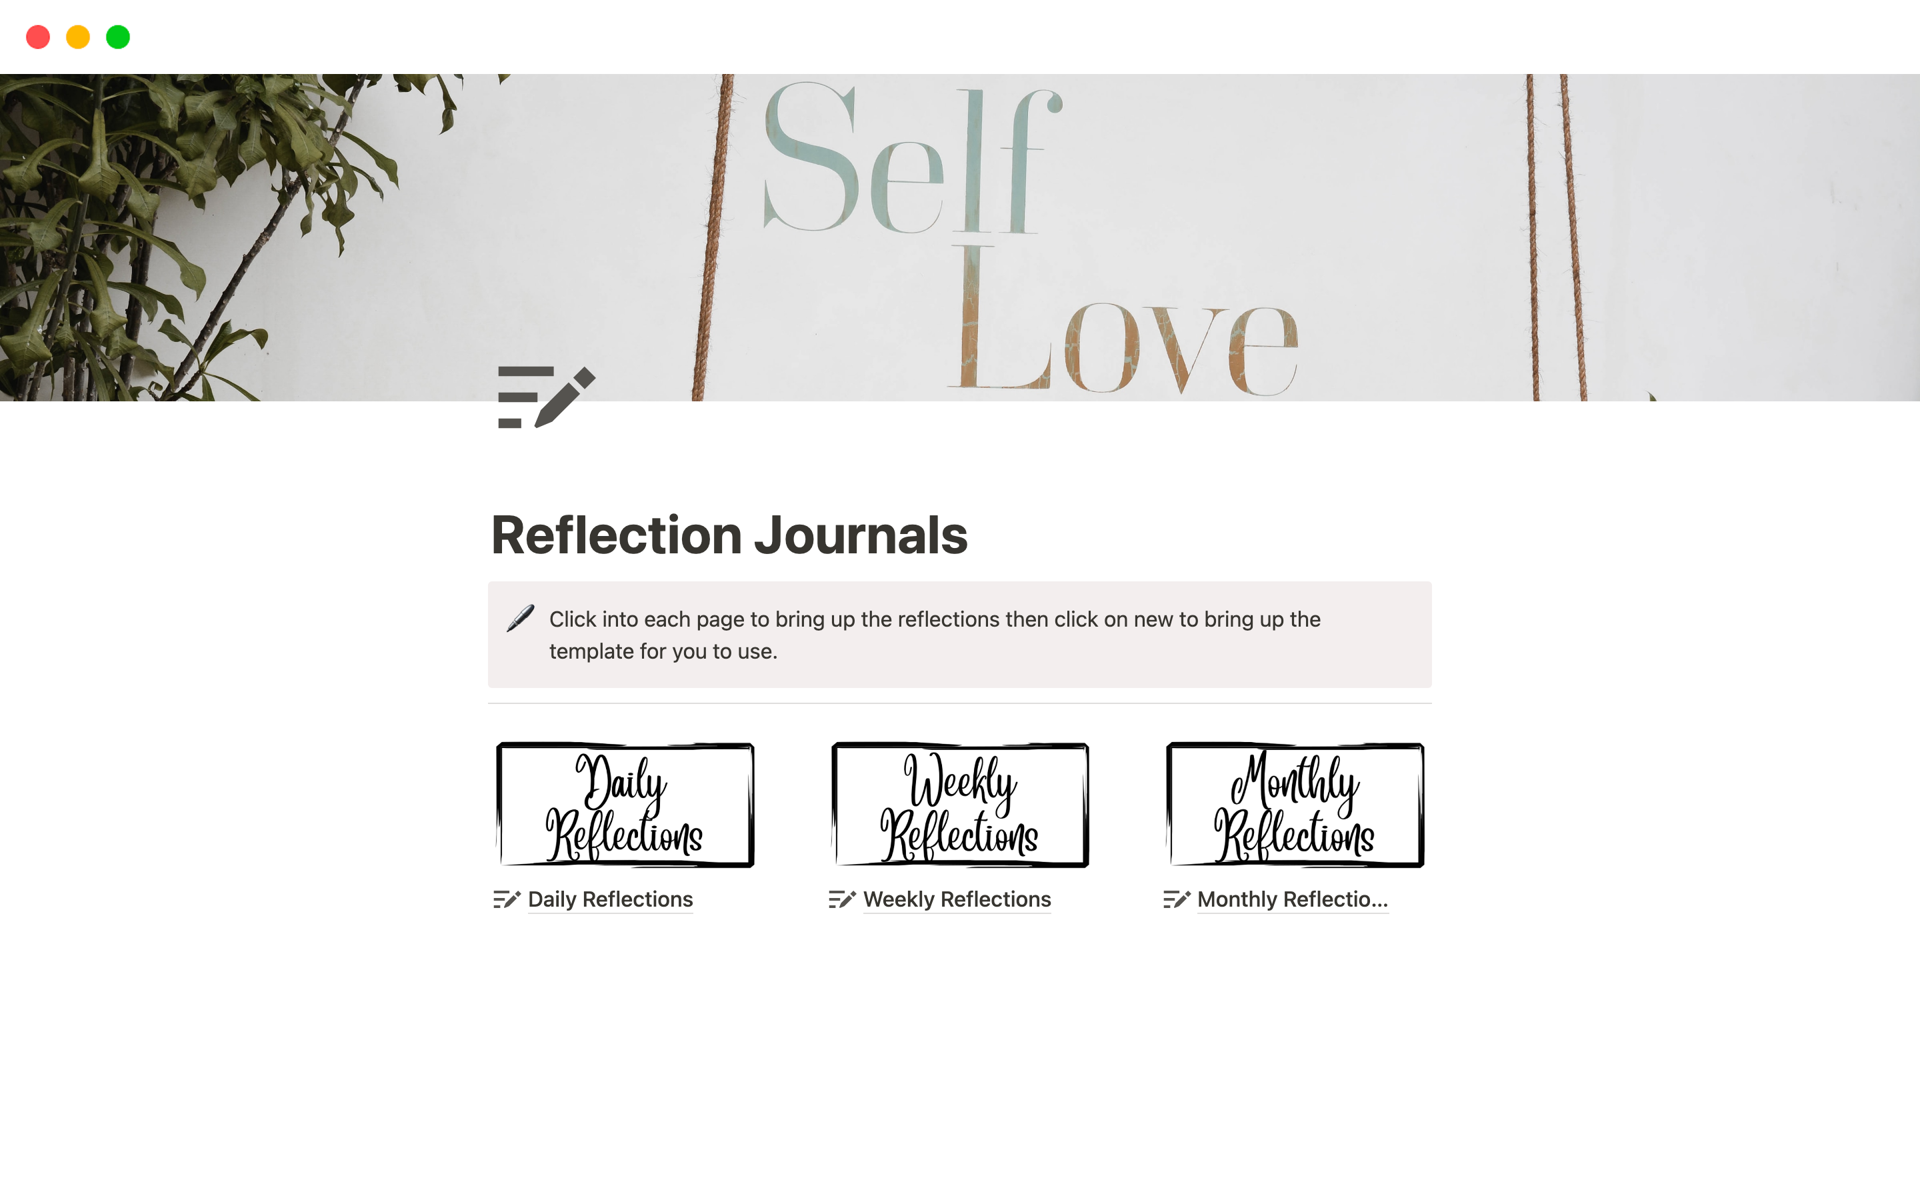 Vista previa de plantilla para Reflection Journals